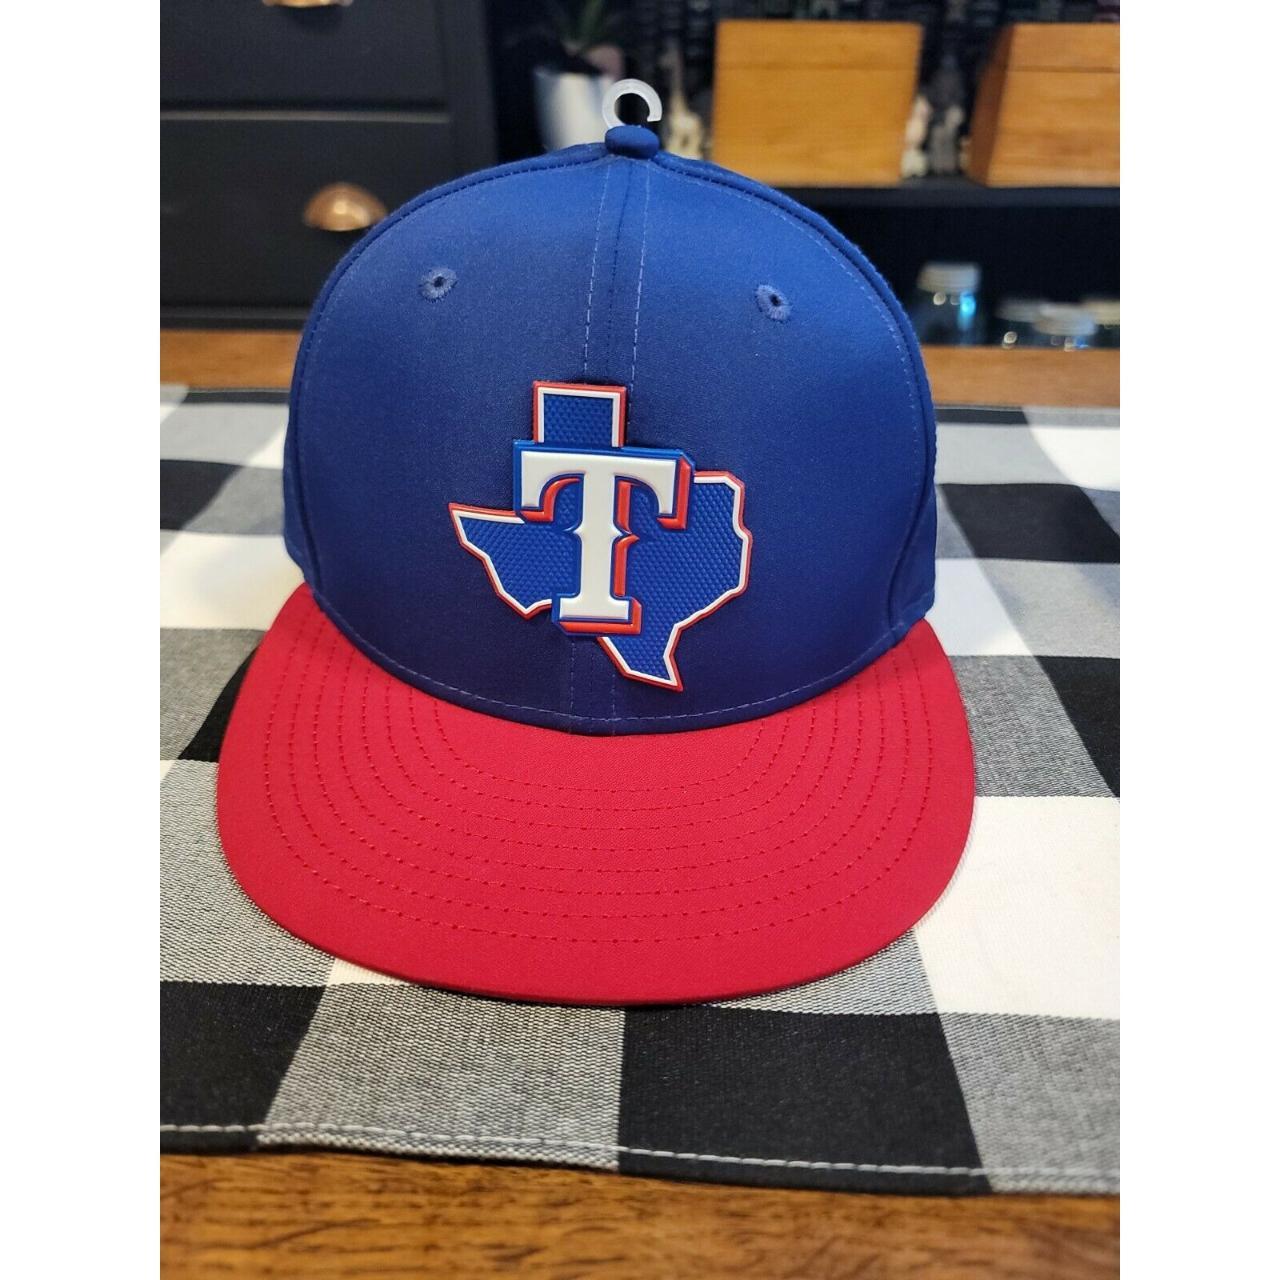 New Era Men's Texas Rangers Batting Practice OTC 59FIFTY Cap